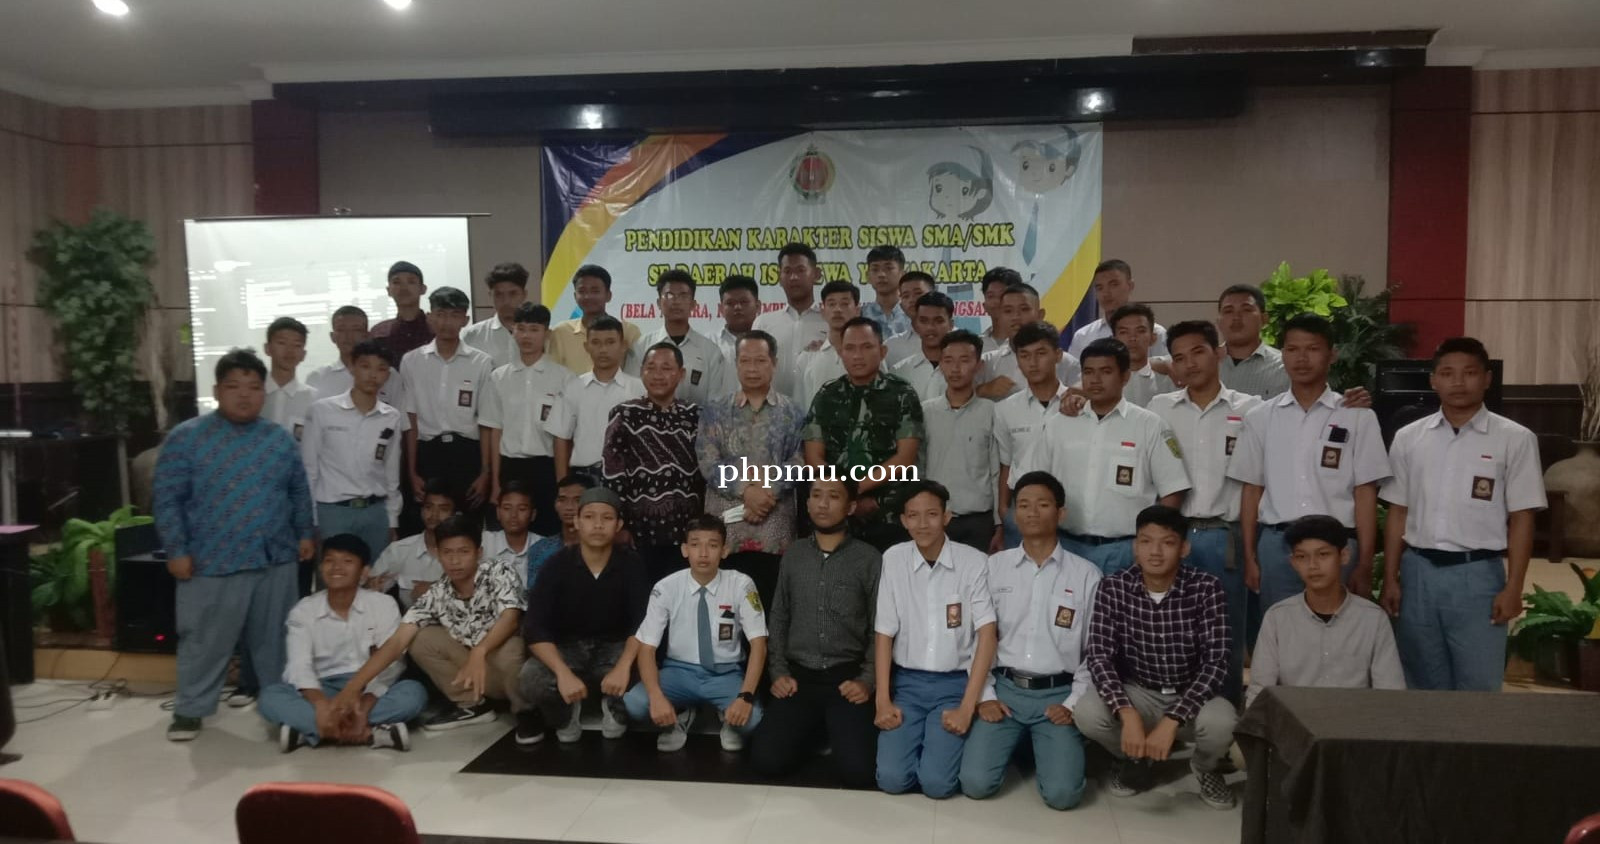 Kegiatan Pendidikan Karakter Siswa SMA/SMK Se Daerah Istimewa Yogyakarta 